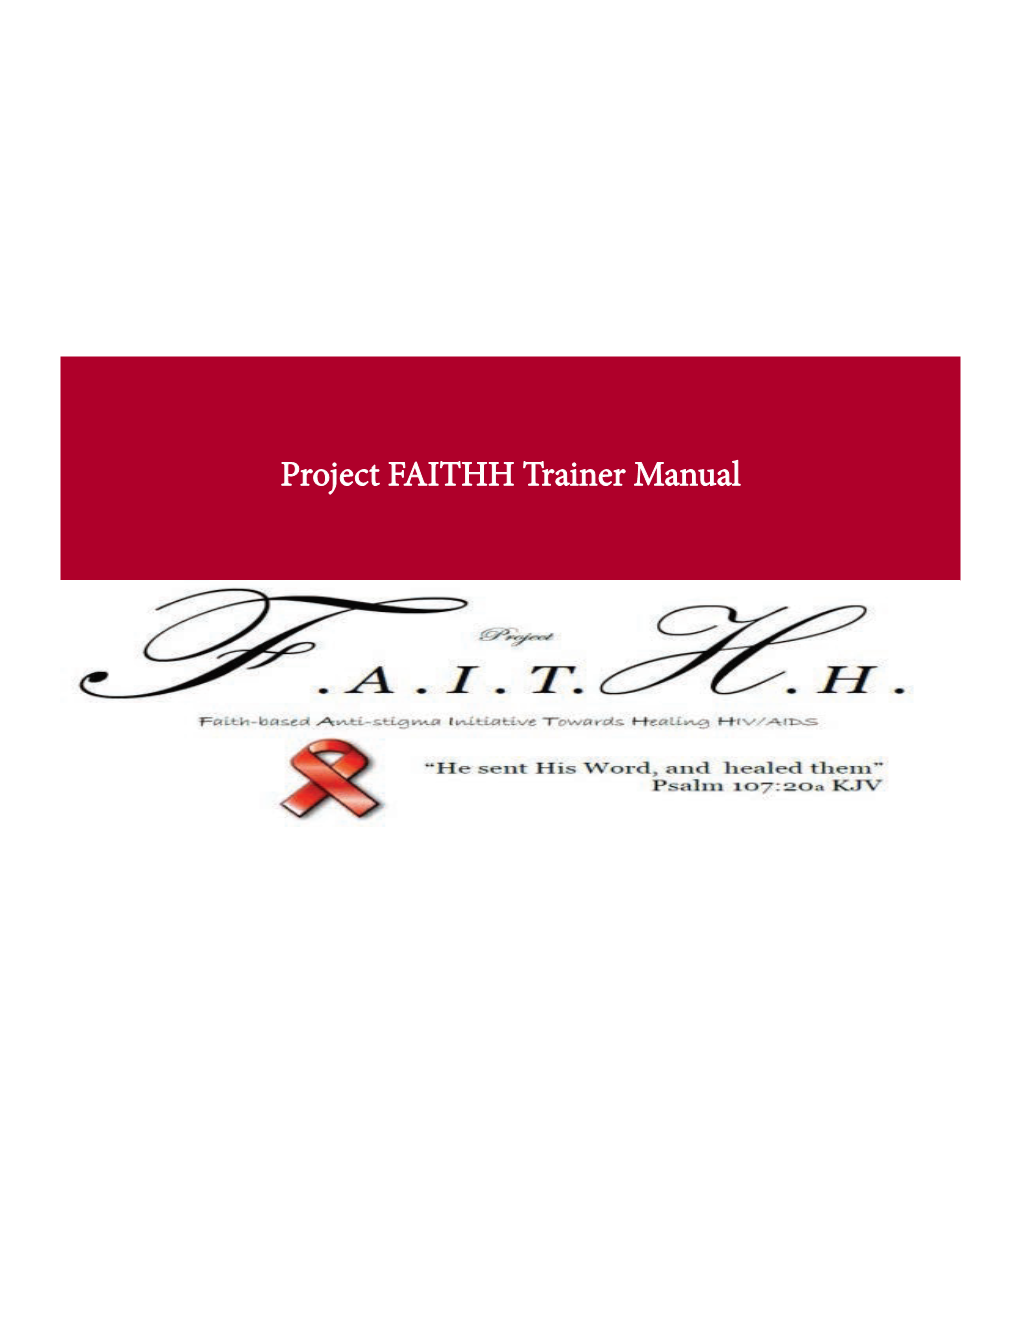 Project FAITHH Training Manual